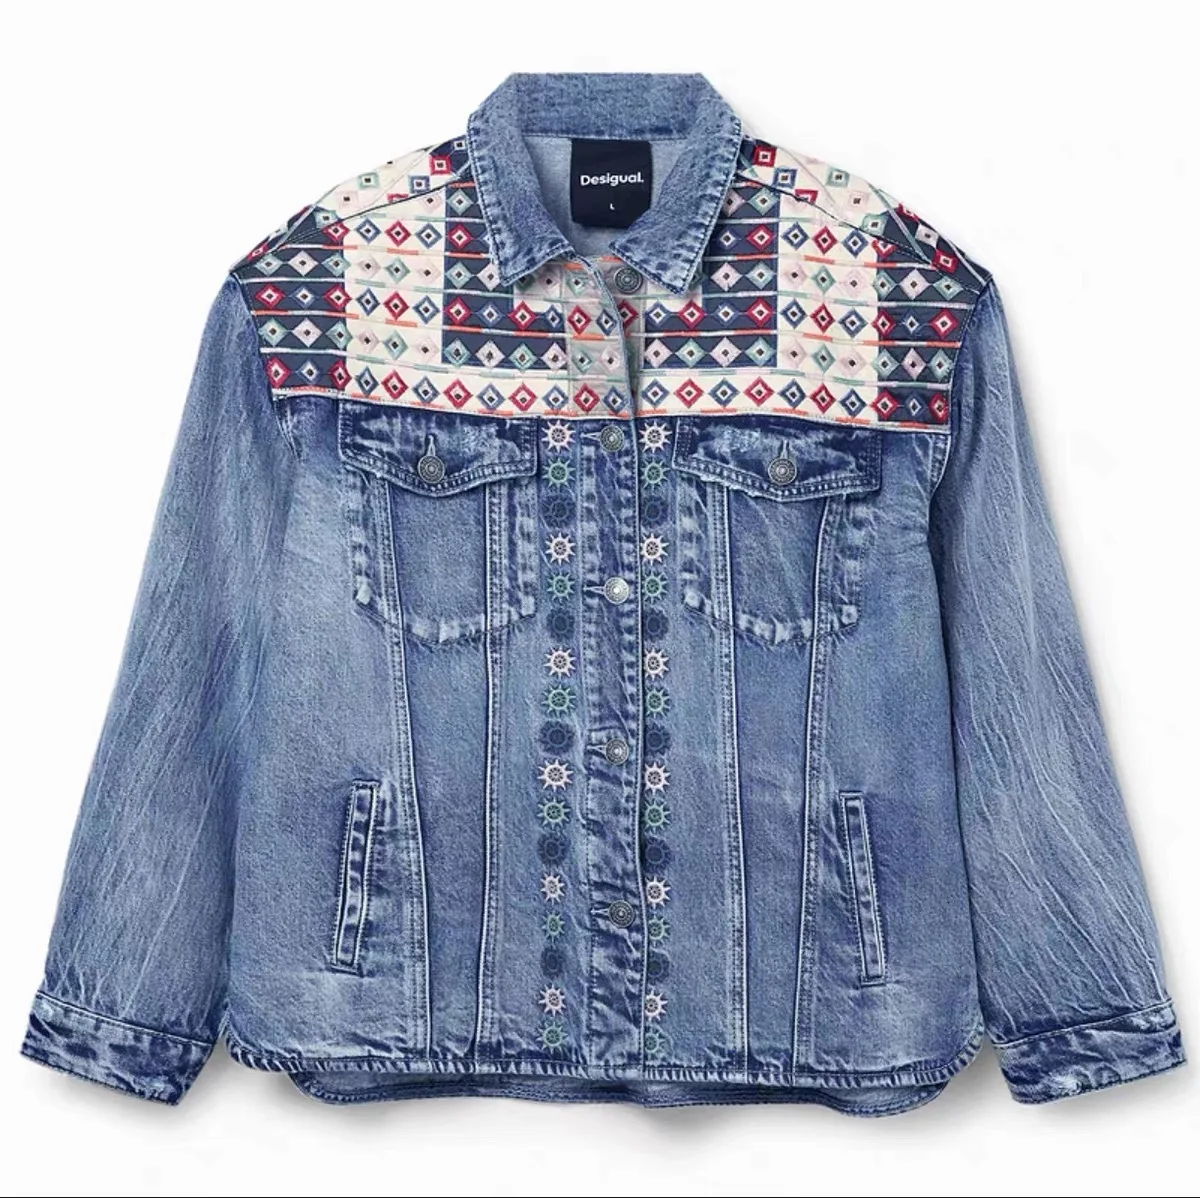 

Foreign trade original order: Spanish Desigual short jacket with embroidered floral patch design and patchwork denim jacket